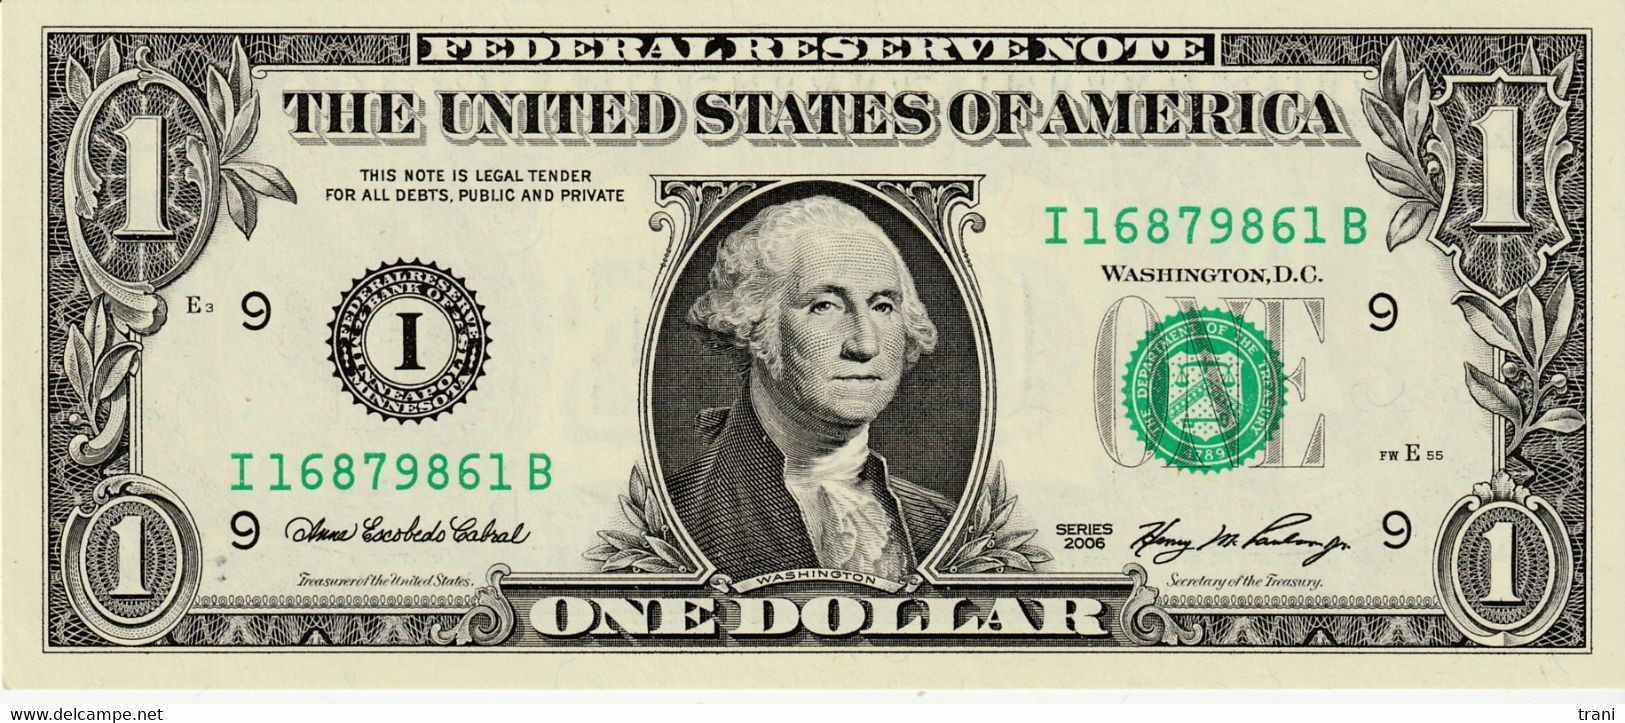 BANCONOTA ONE DOLLAR - WASHINGTON - SERIES 2006 - Federal Reserve (1928-...)